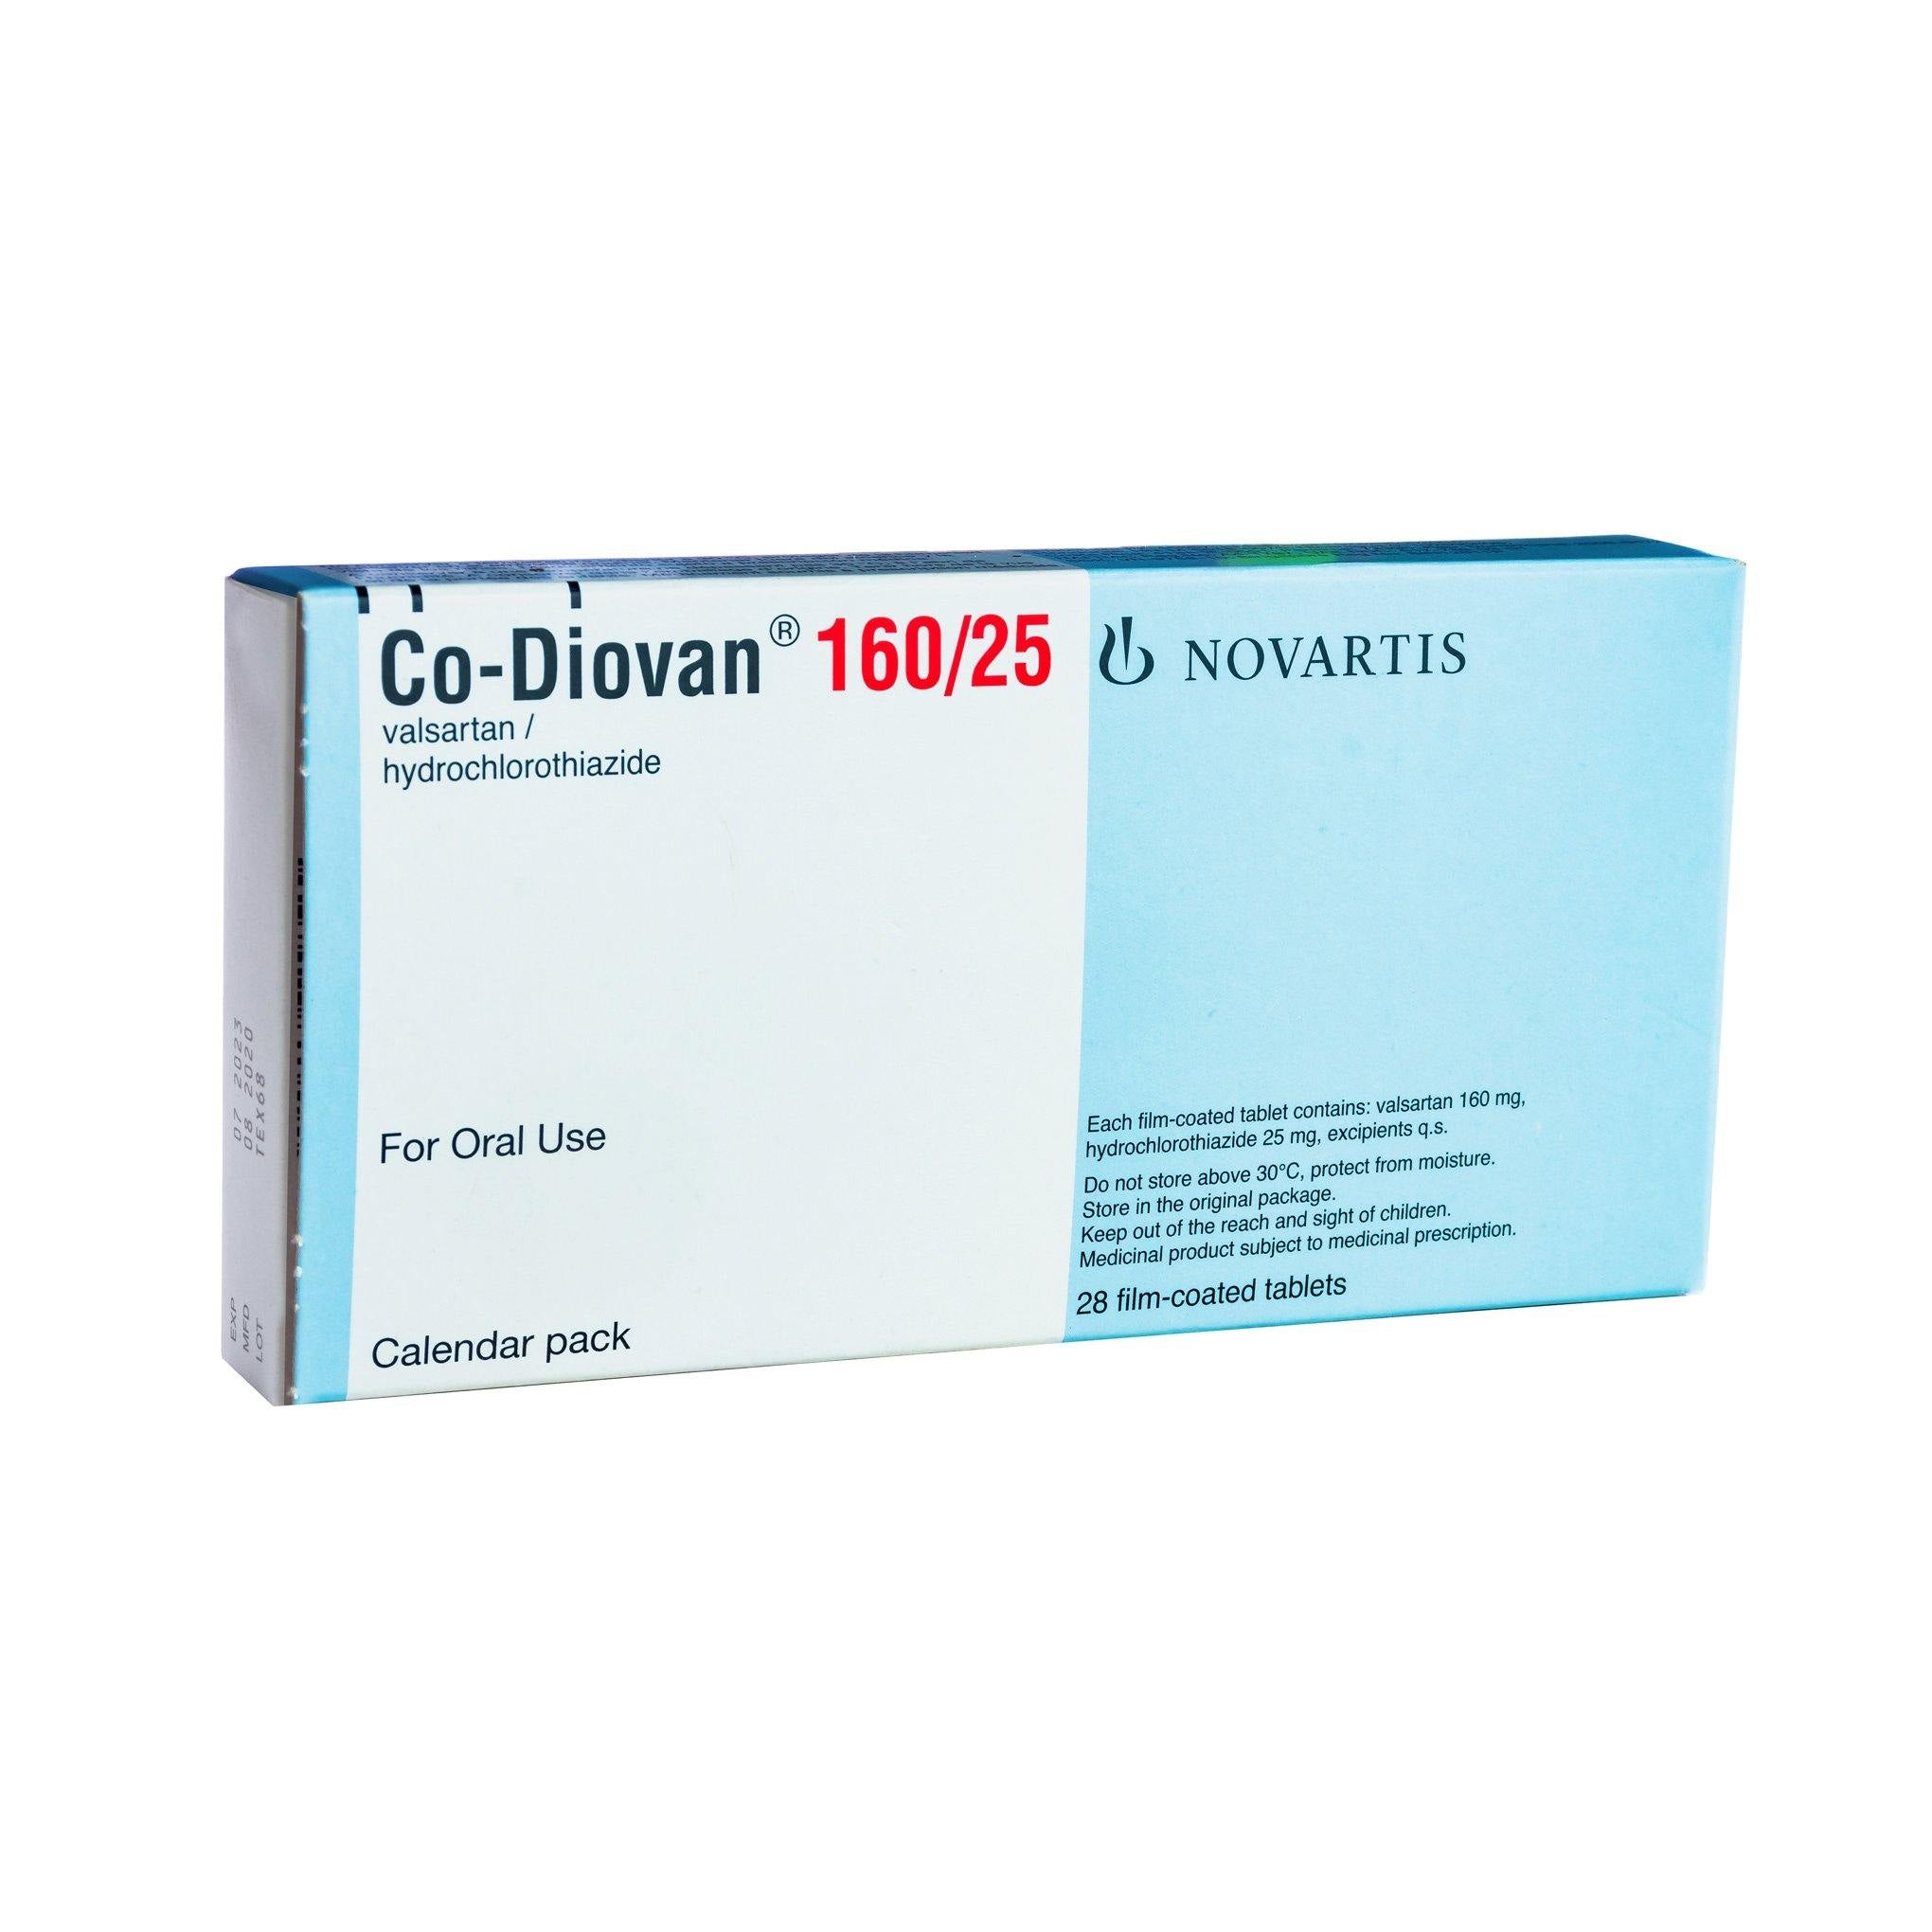 shop Co-Diovan (Valsartan/Hydrochlorothiazide) 160m/25mg Tablets X28 from HealthPlus online pharmacy in Nigeria